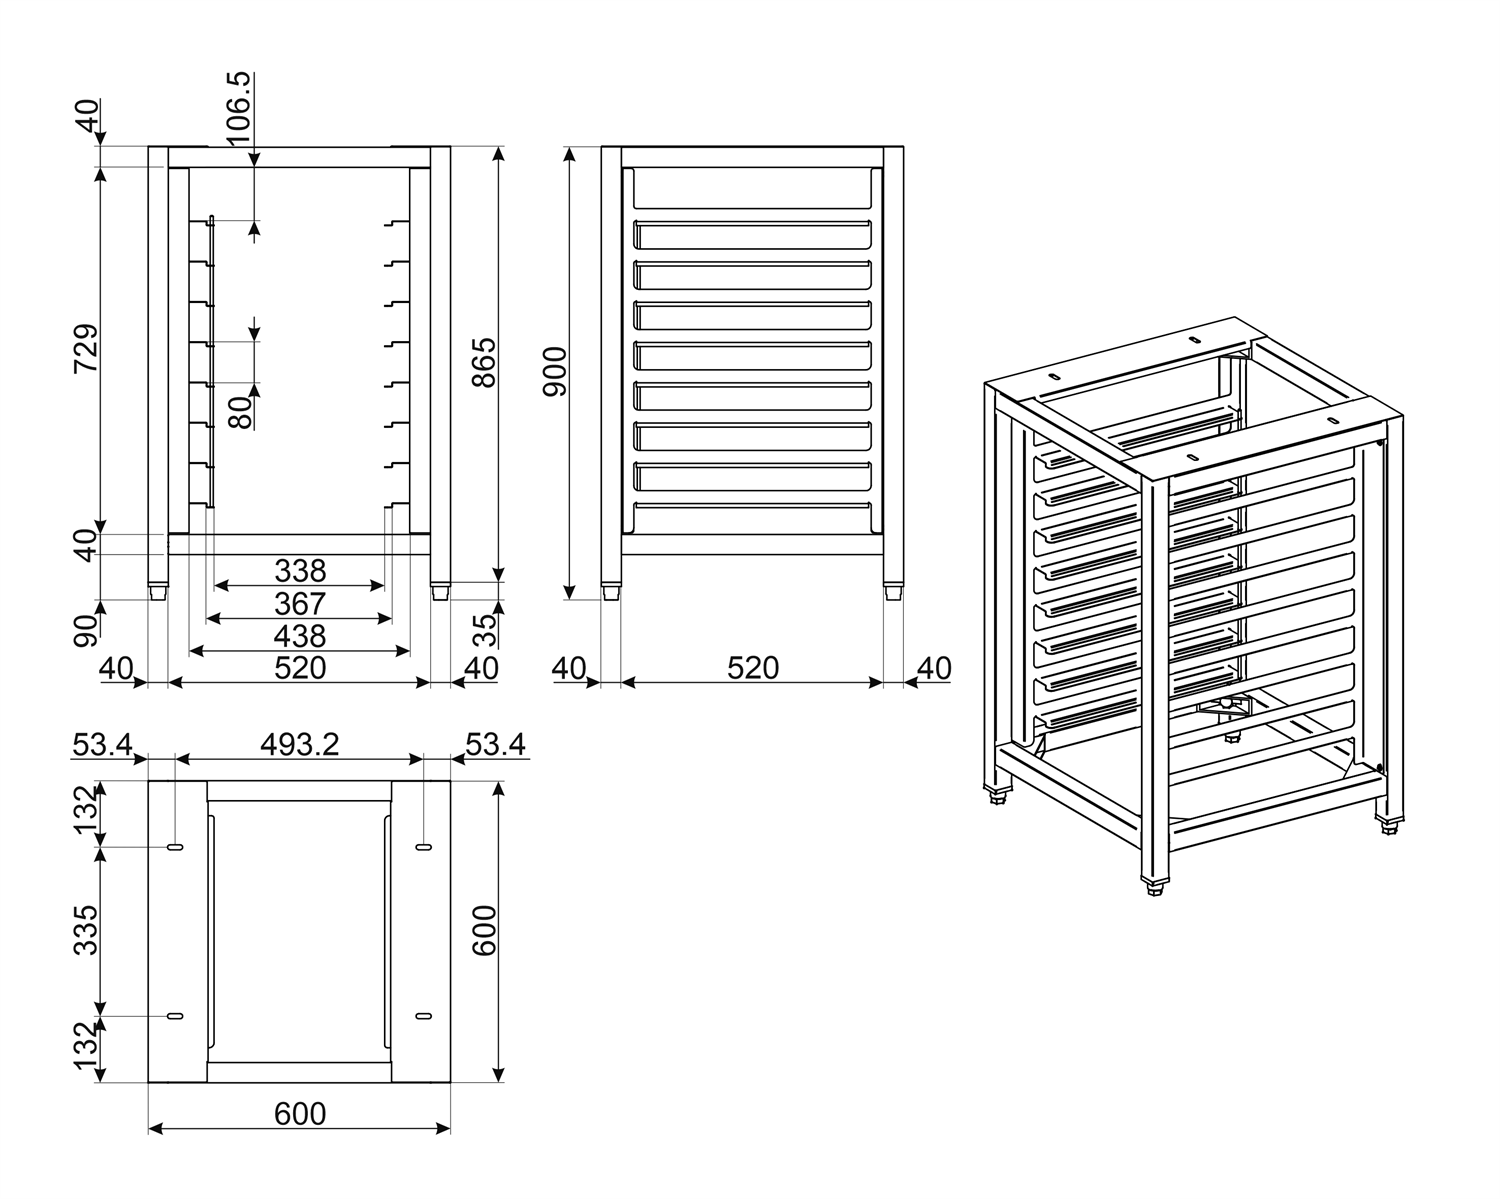 Smeg Stand for ALFA Oven Series 43- 435 x 320mm Tray capacity TVL40